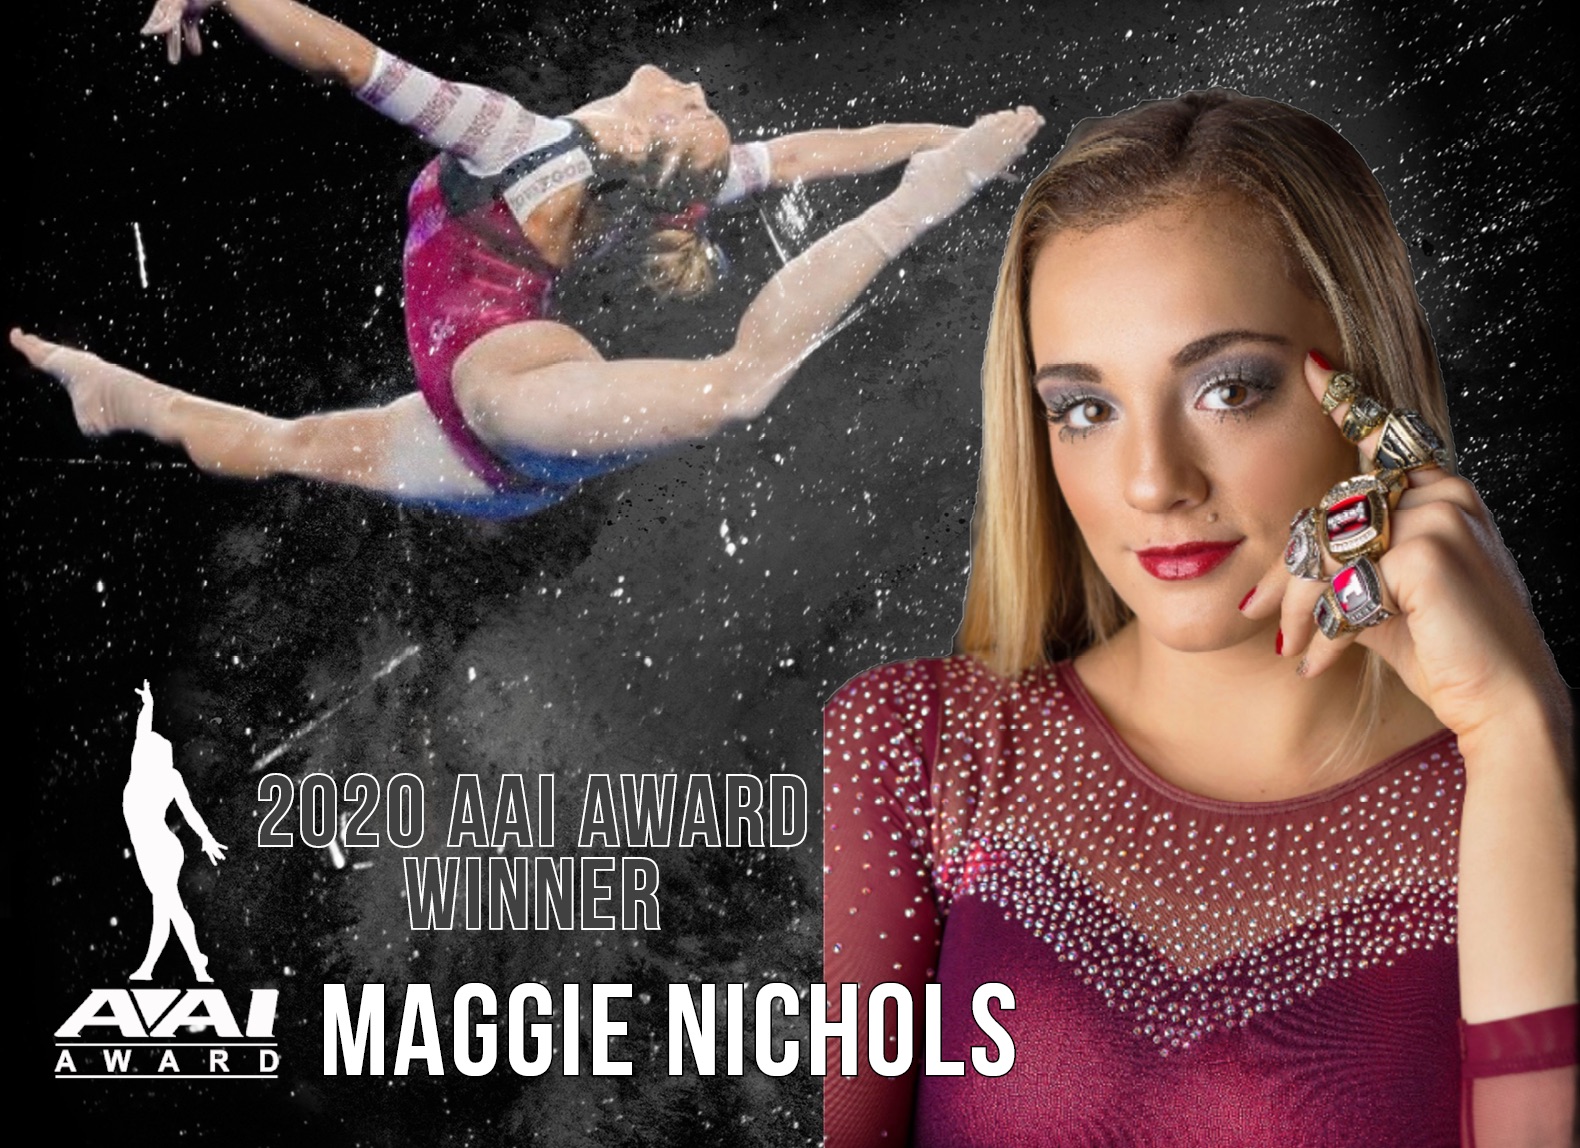 Press Release: AAI ANNOUNCES 2020 AAI AWARD WINNER - Maggie Nichols.